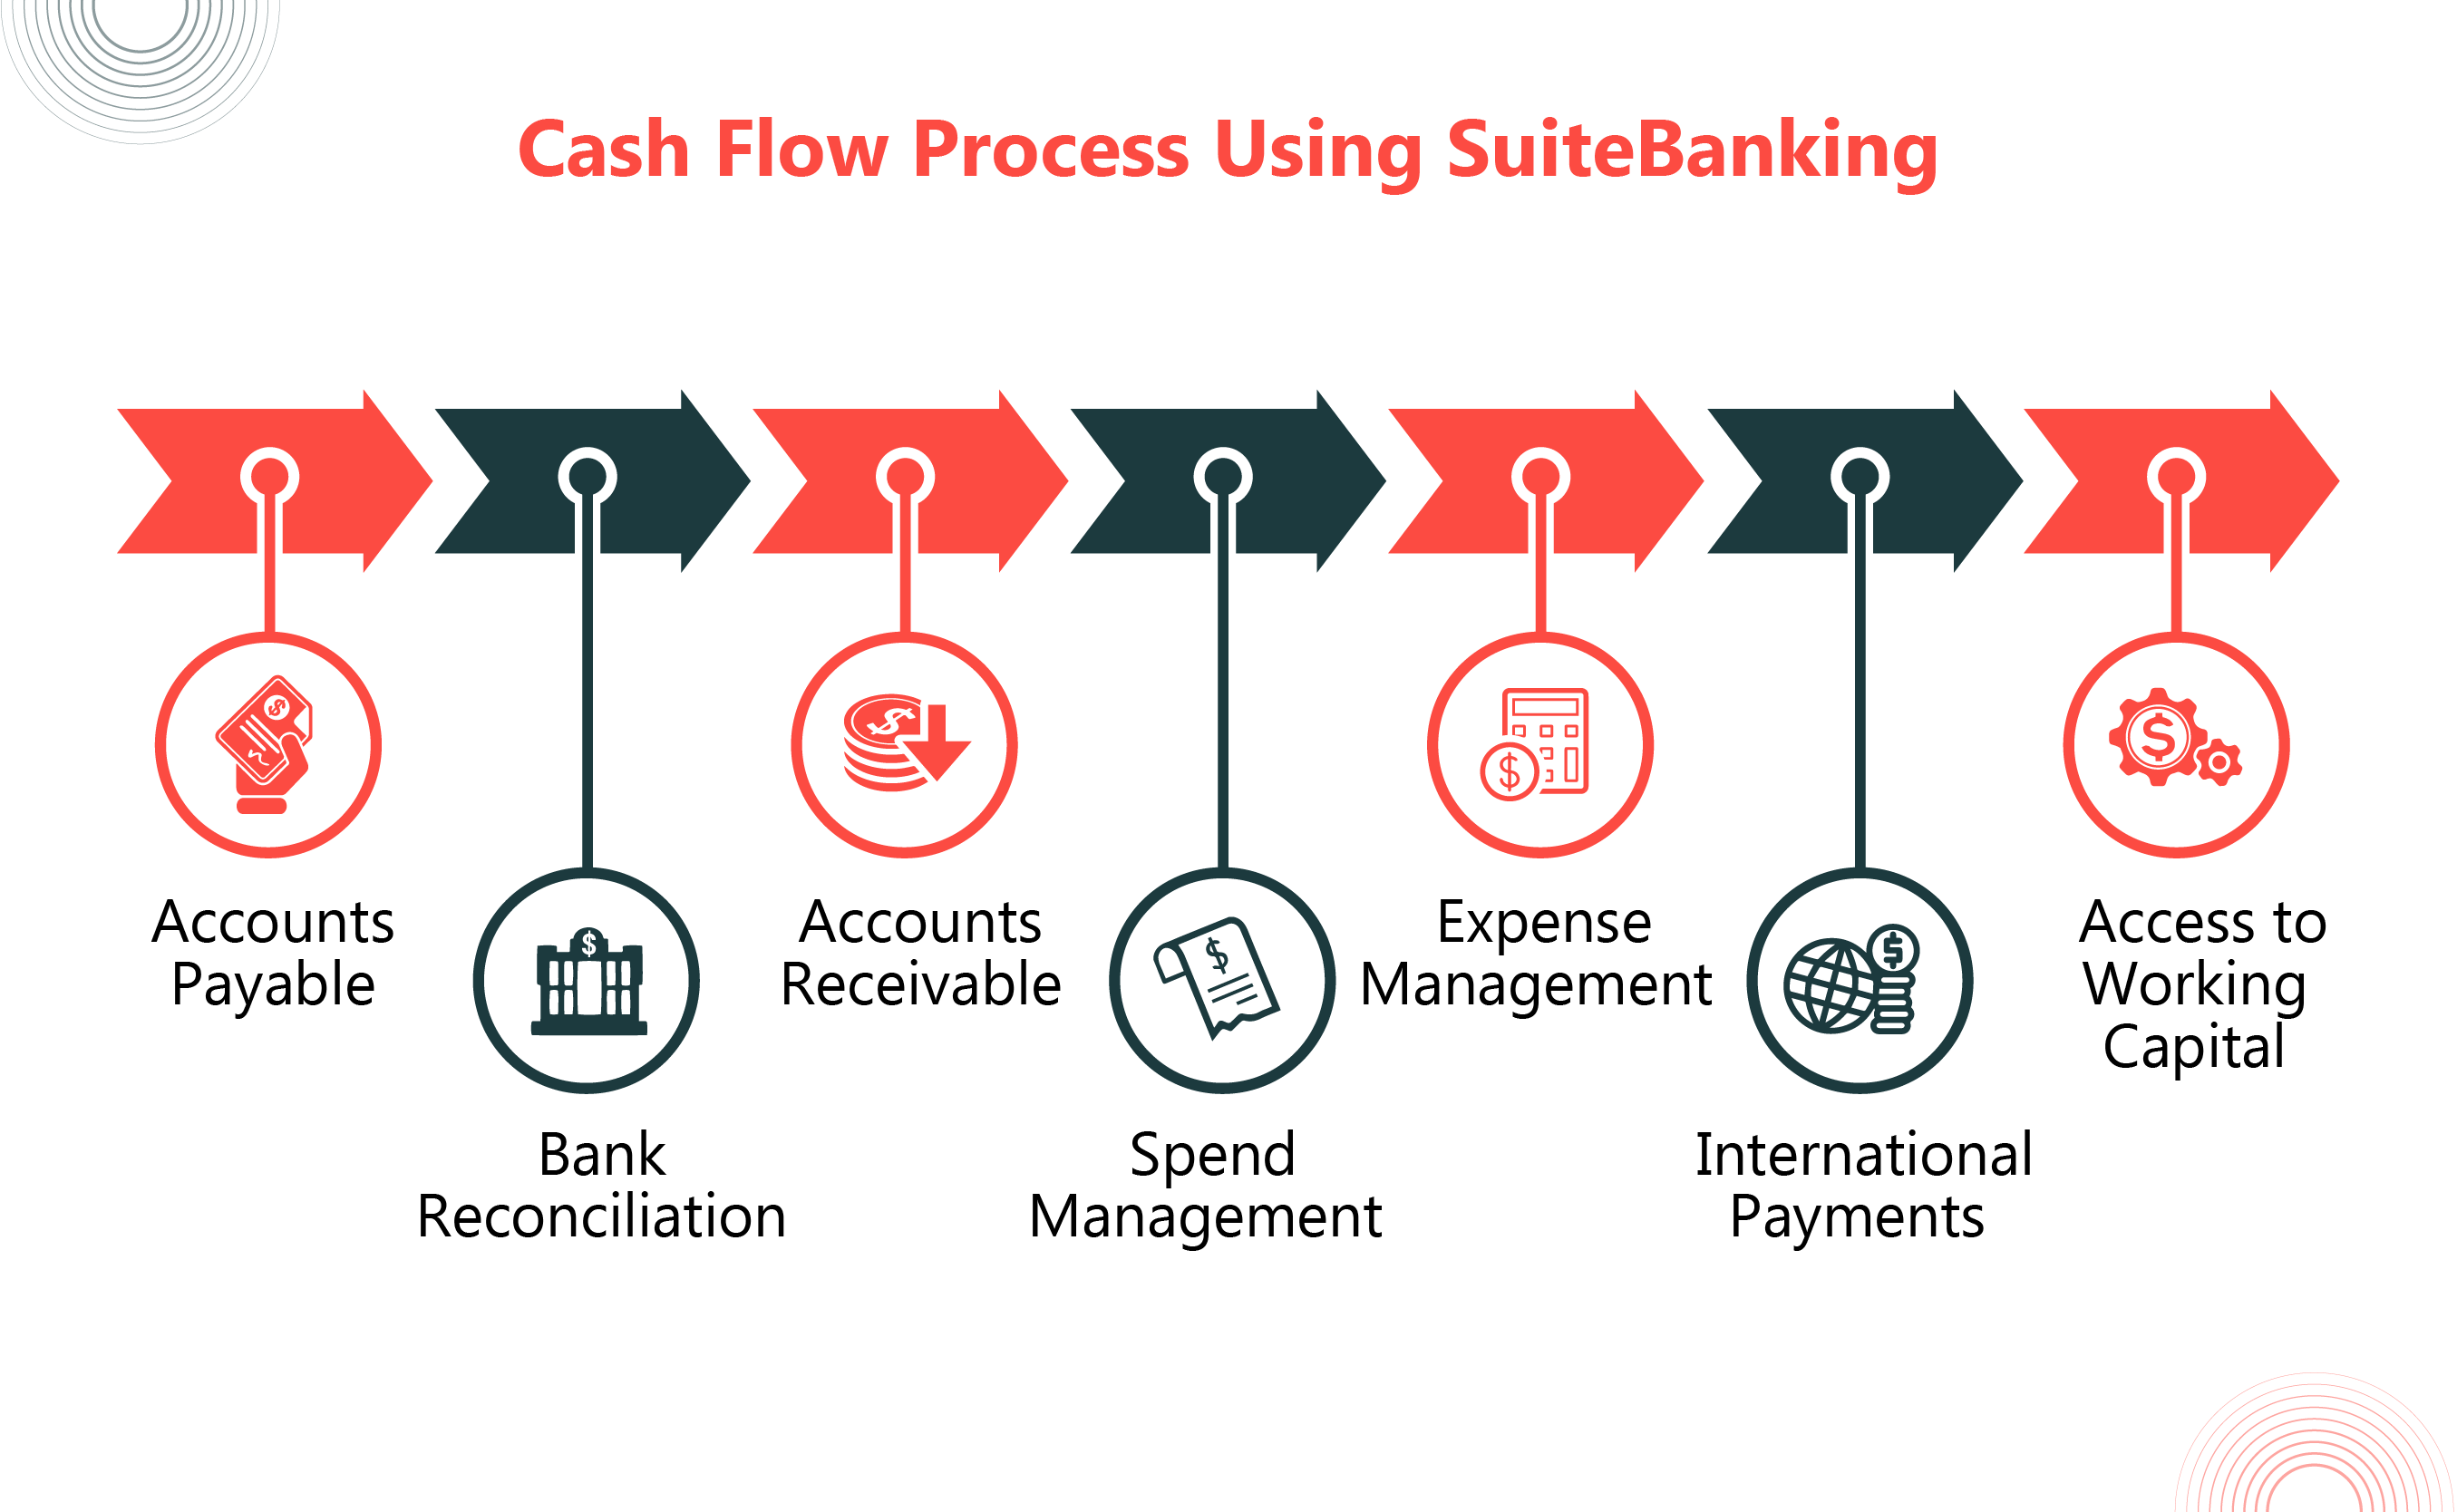 Cash Flow Process Using SuiteBanking